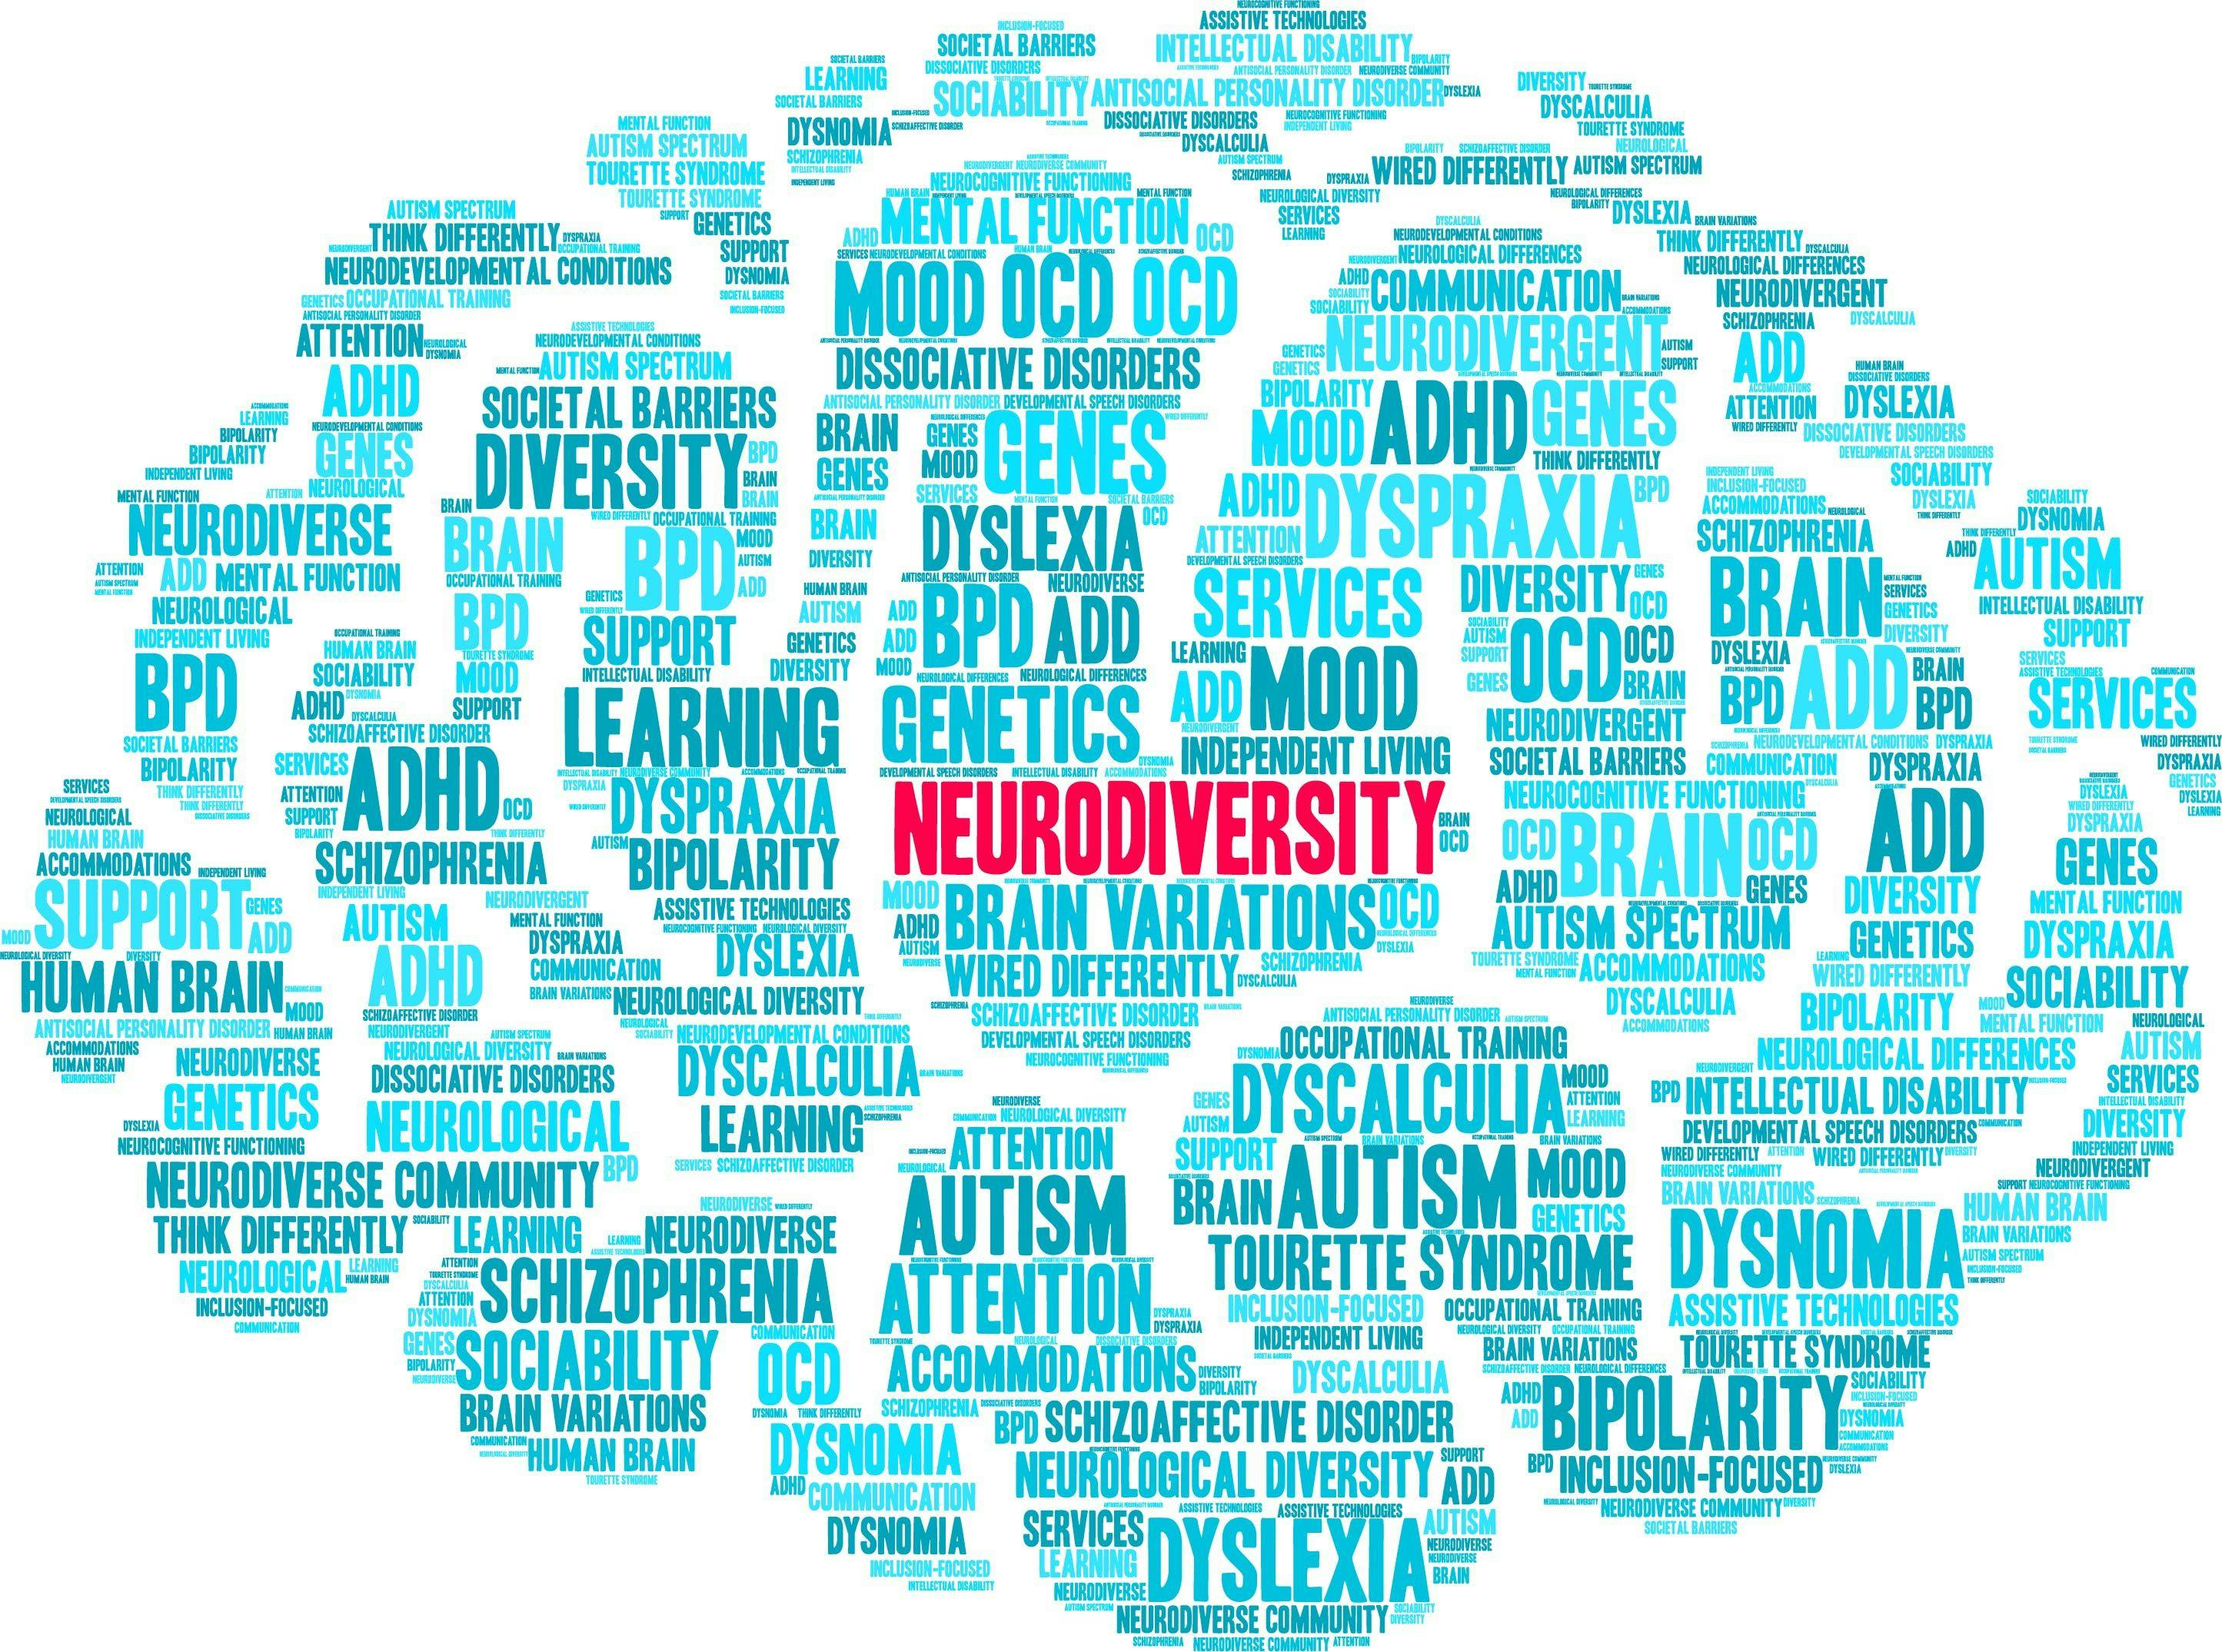 neurodiversity